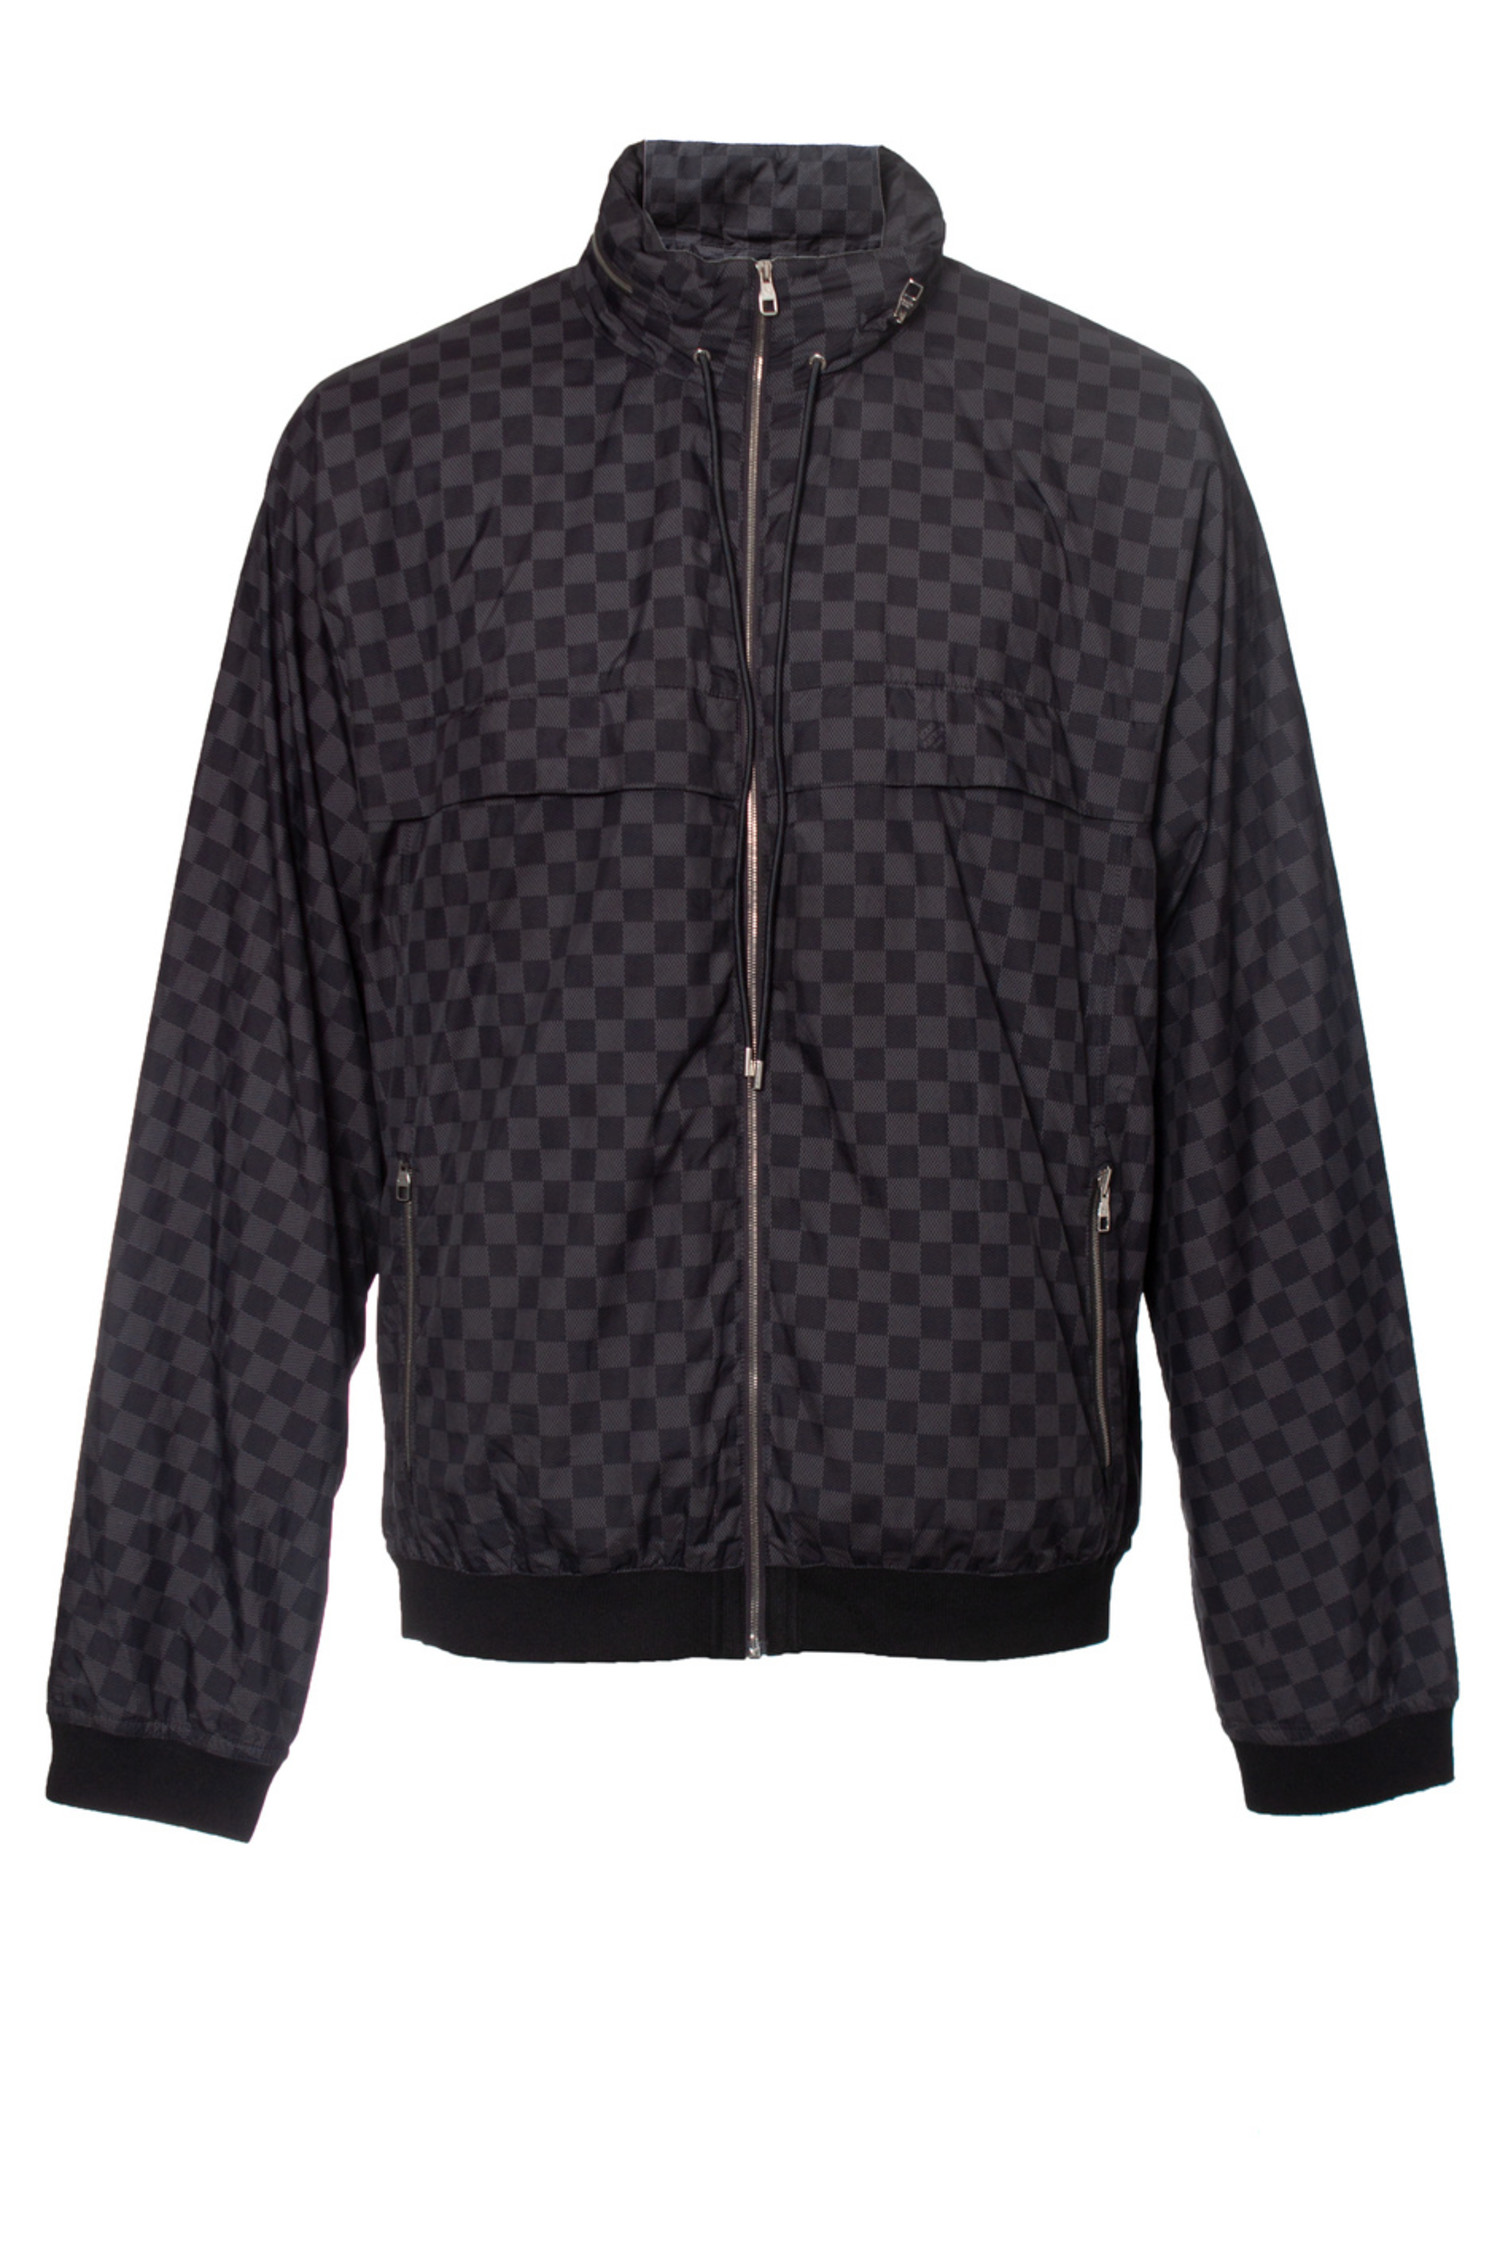 Louis Vuitton Damier Graphite Liner Zip Jacket M Black Gray Vintage LV Logo